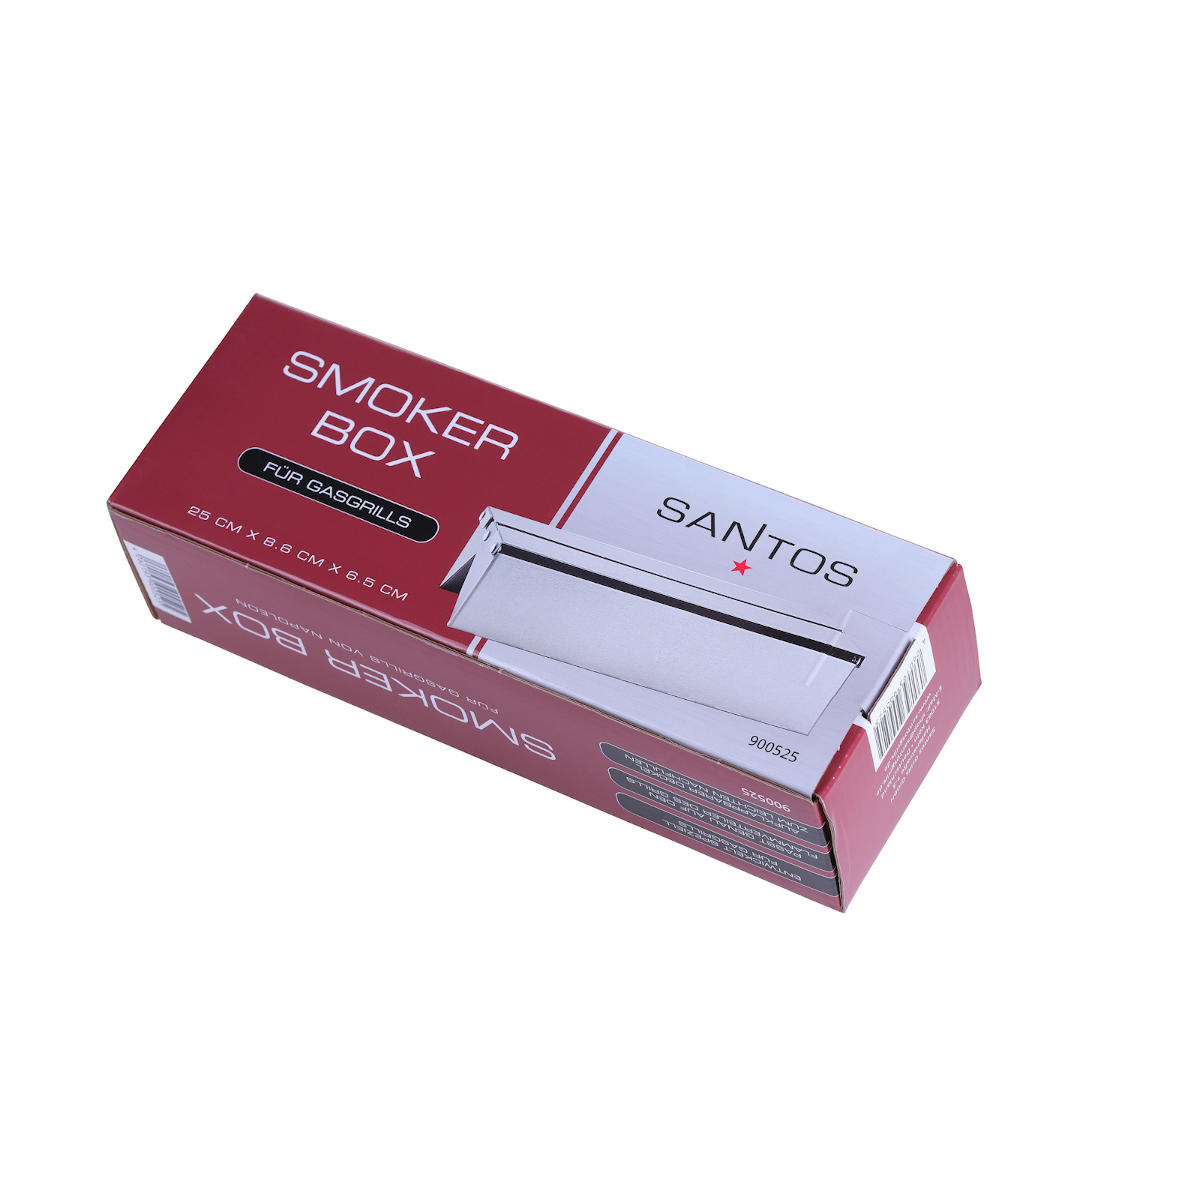 SANTOS Smoker Box für Gasgrills Verpackung 2